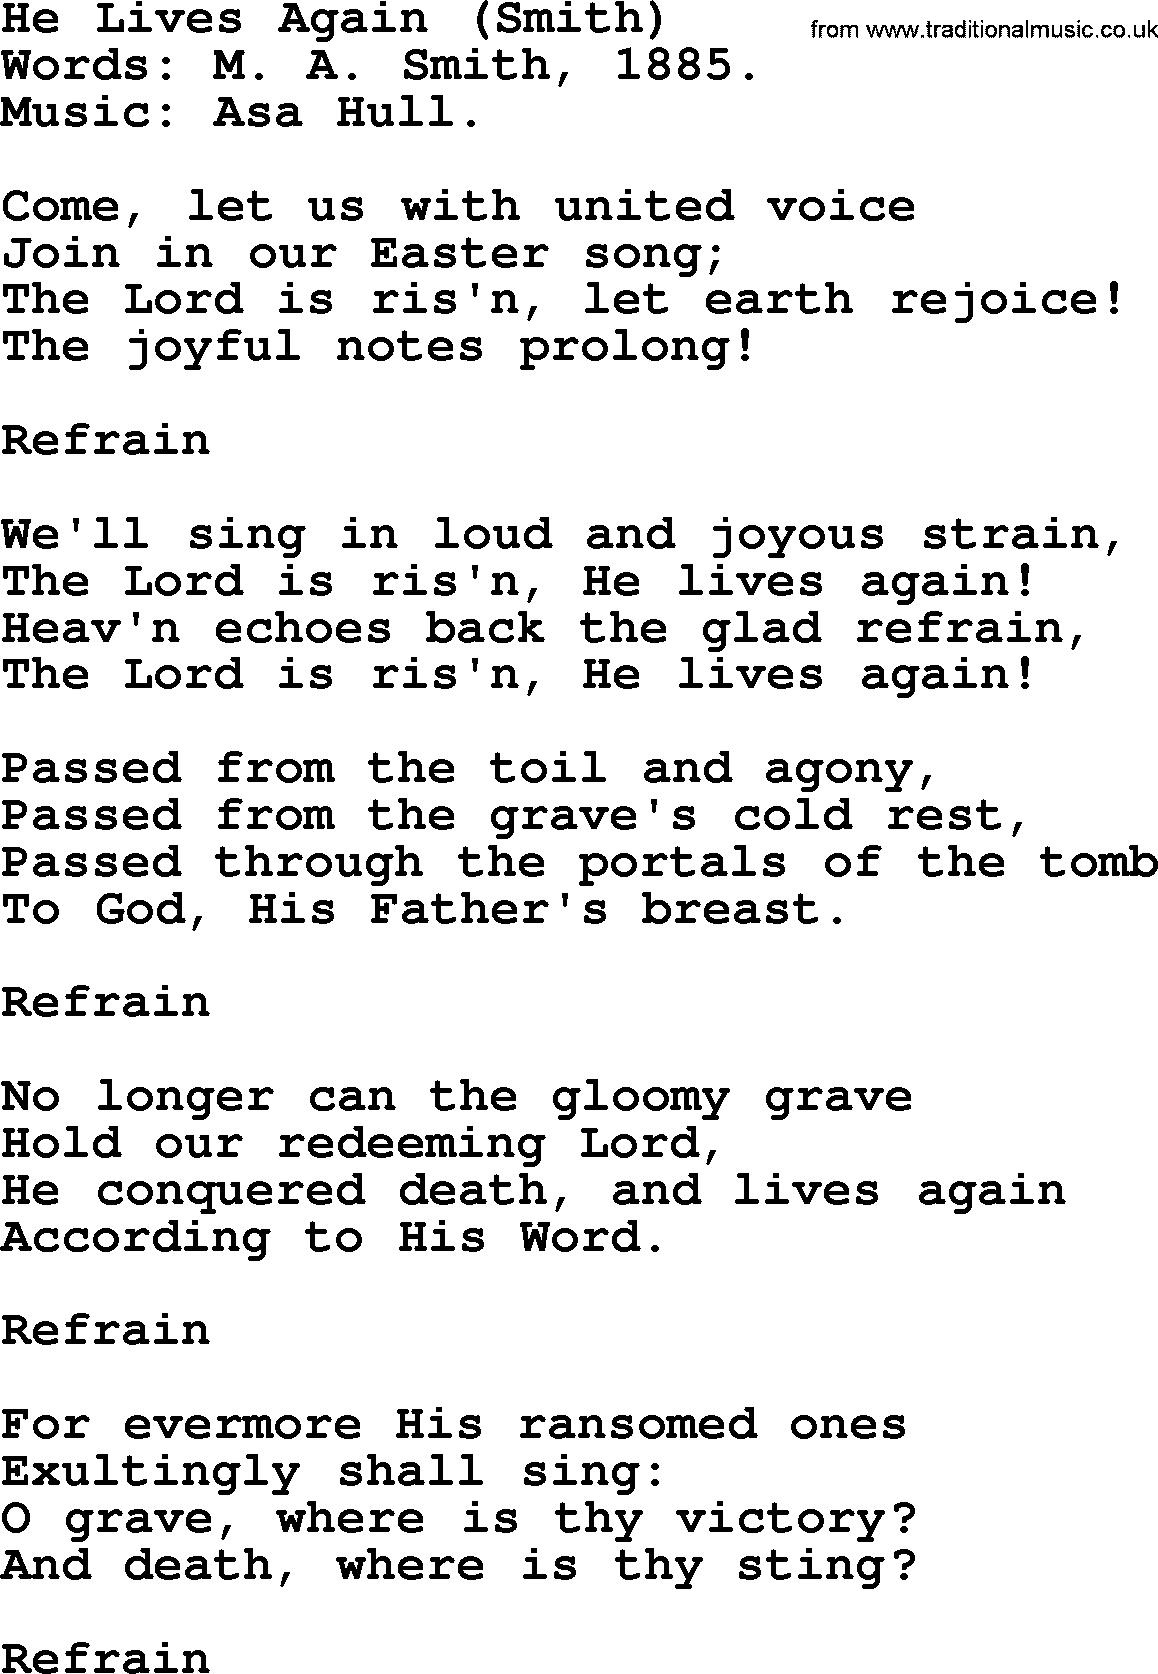 Easter Hymns, Hymn: He Lives Again (smith), lyrics with PDF